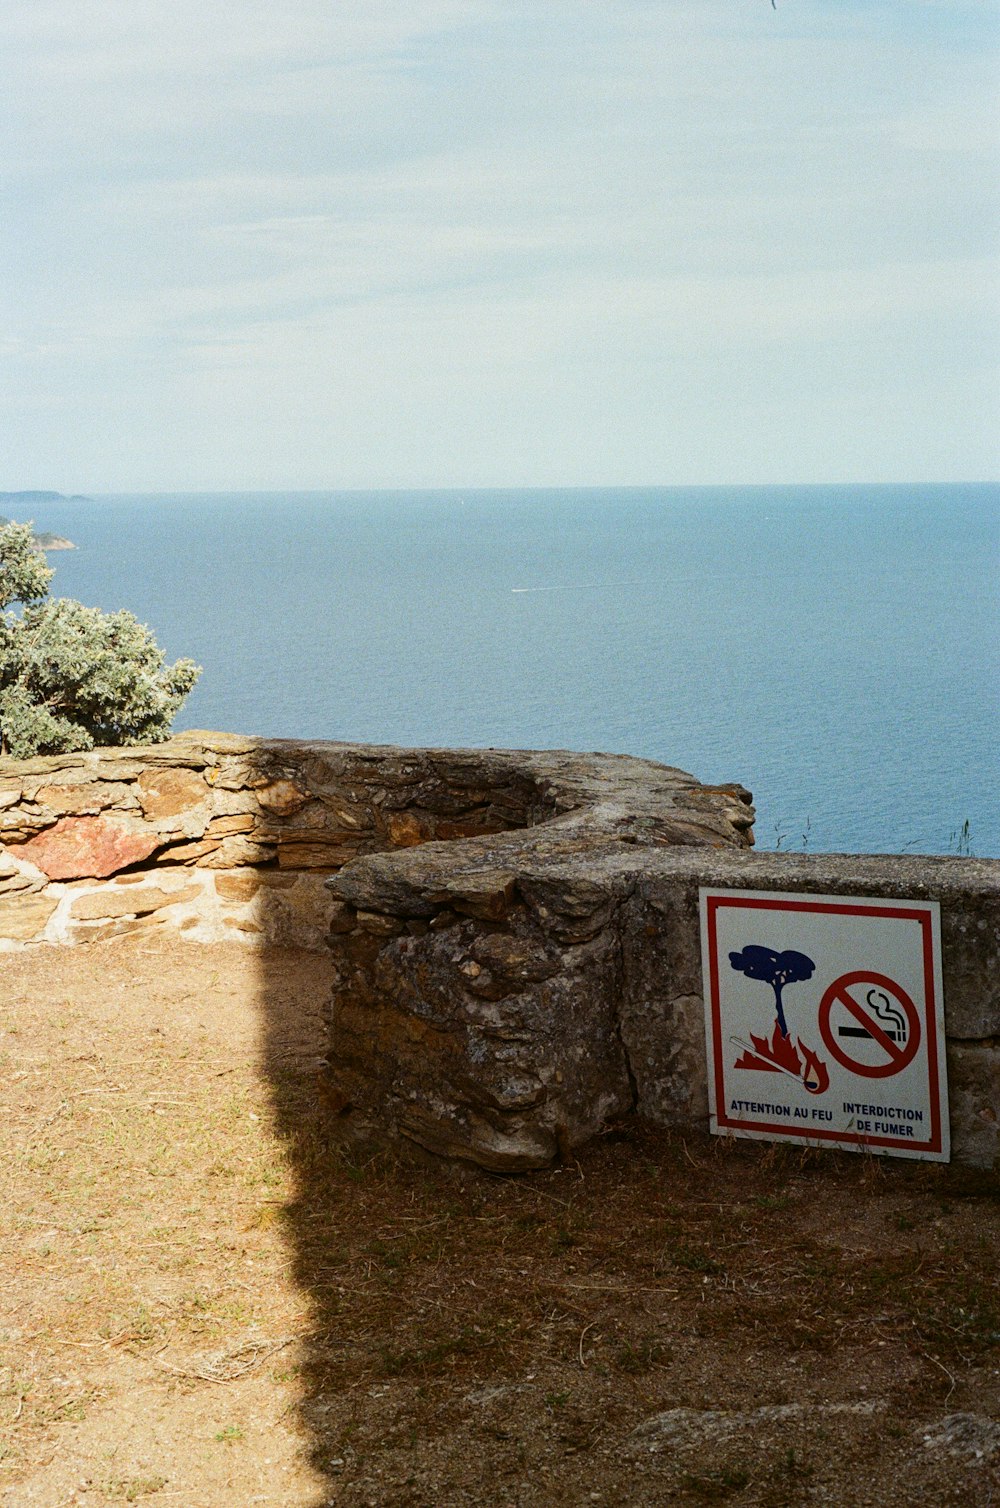 a sign on a stone wall near the ocean